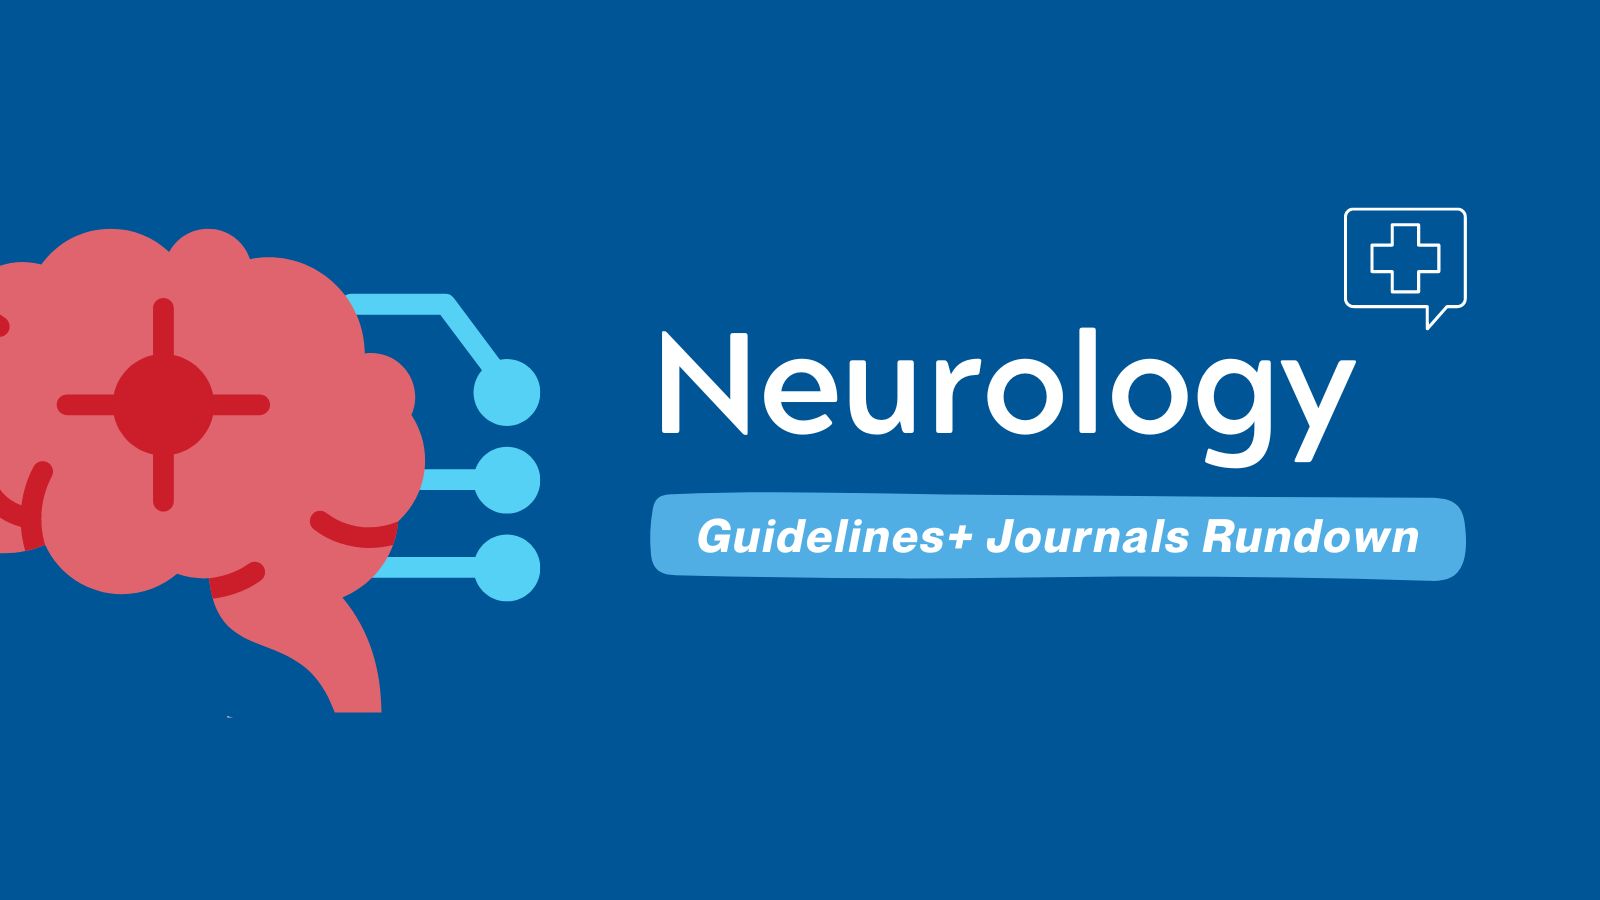 Guidelines+ Journals Rundown Neurology